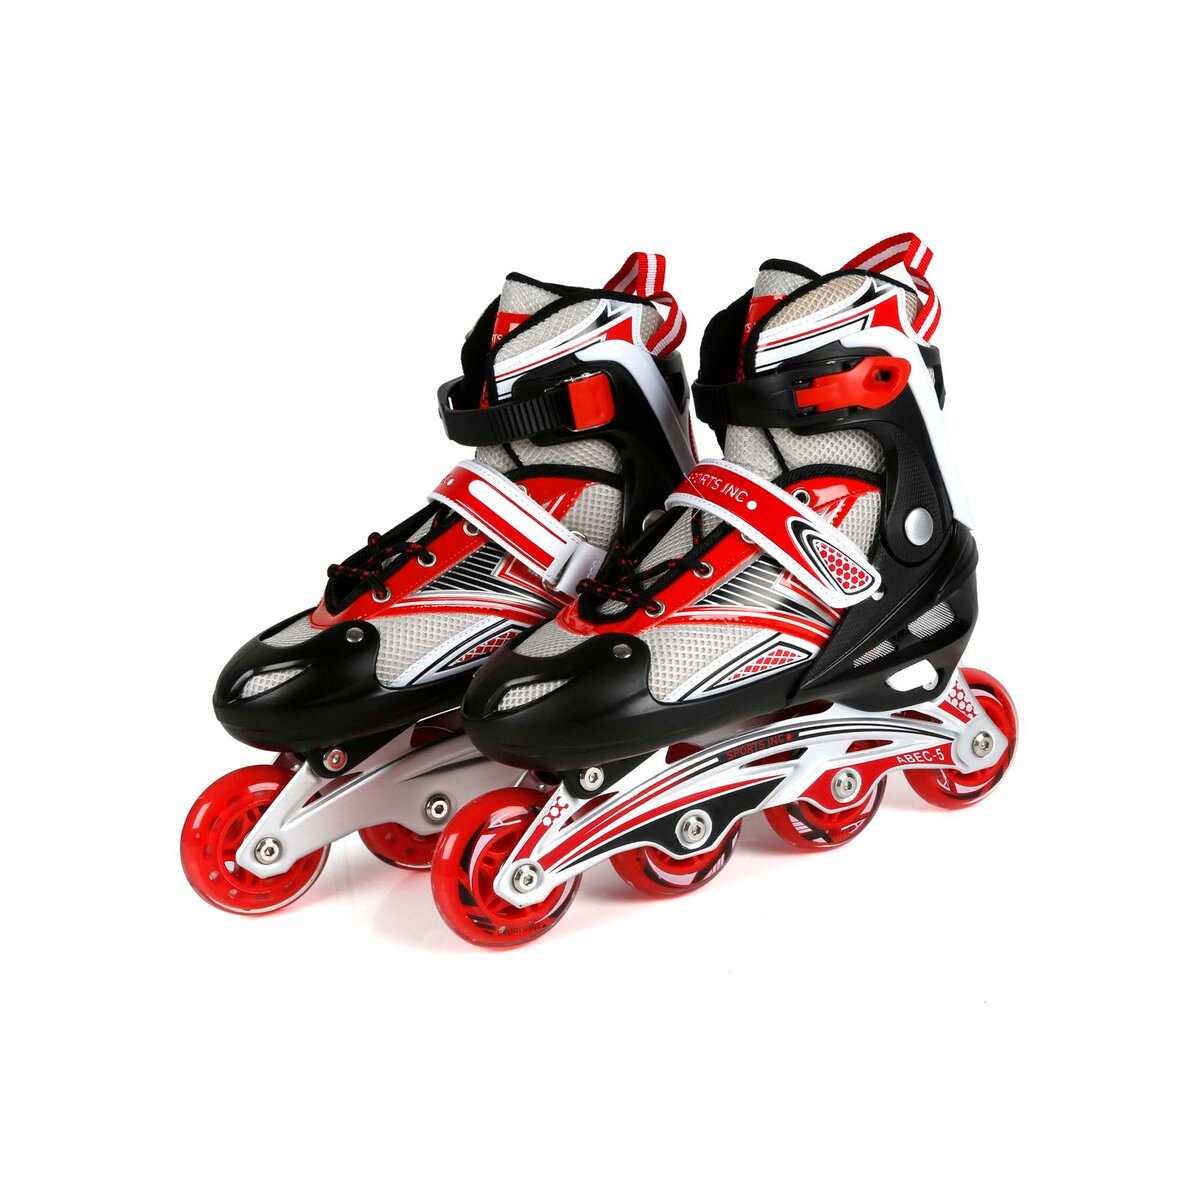 Sports Inc Skating Shoe, TE-261, Red, Medium